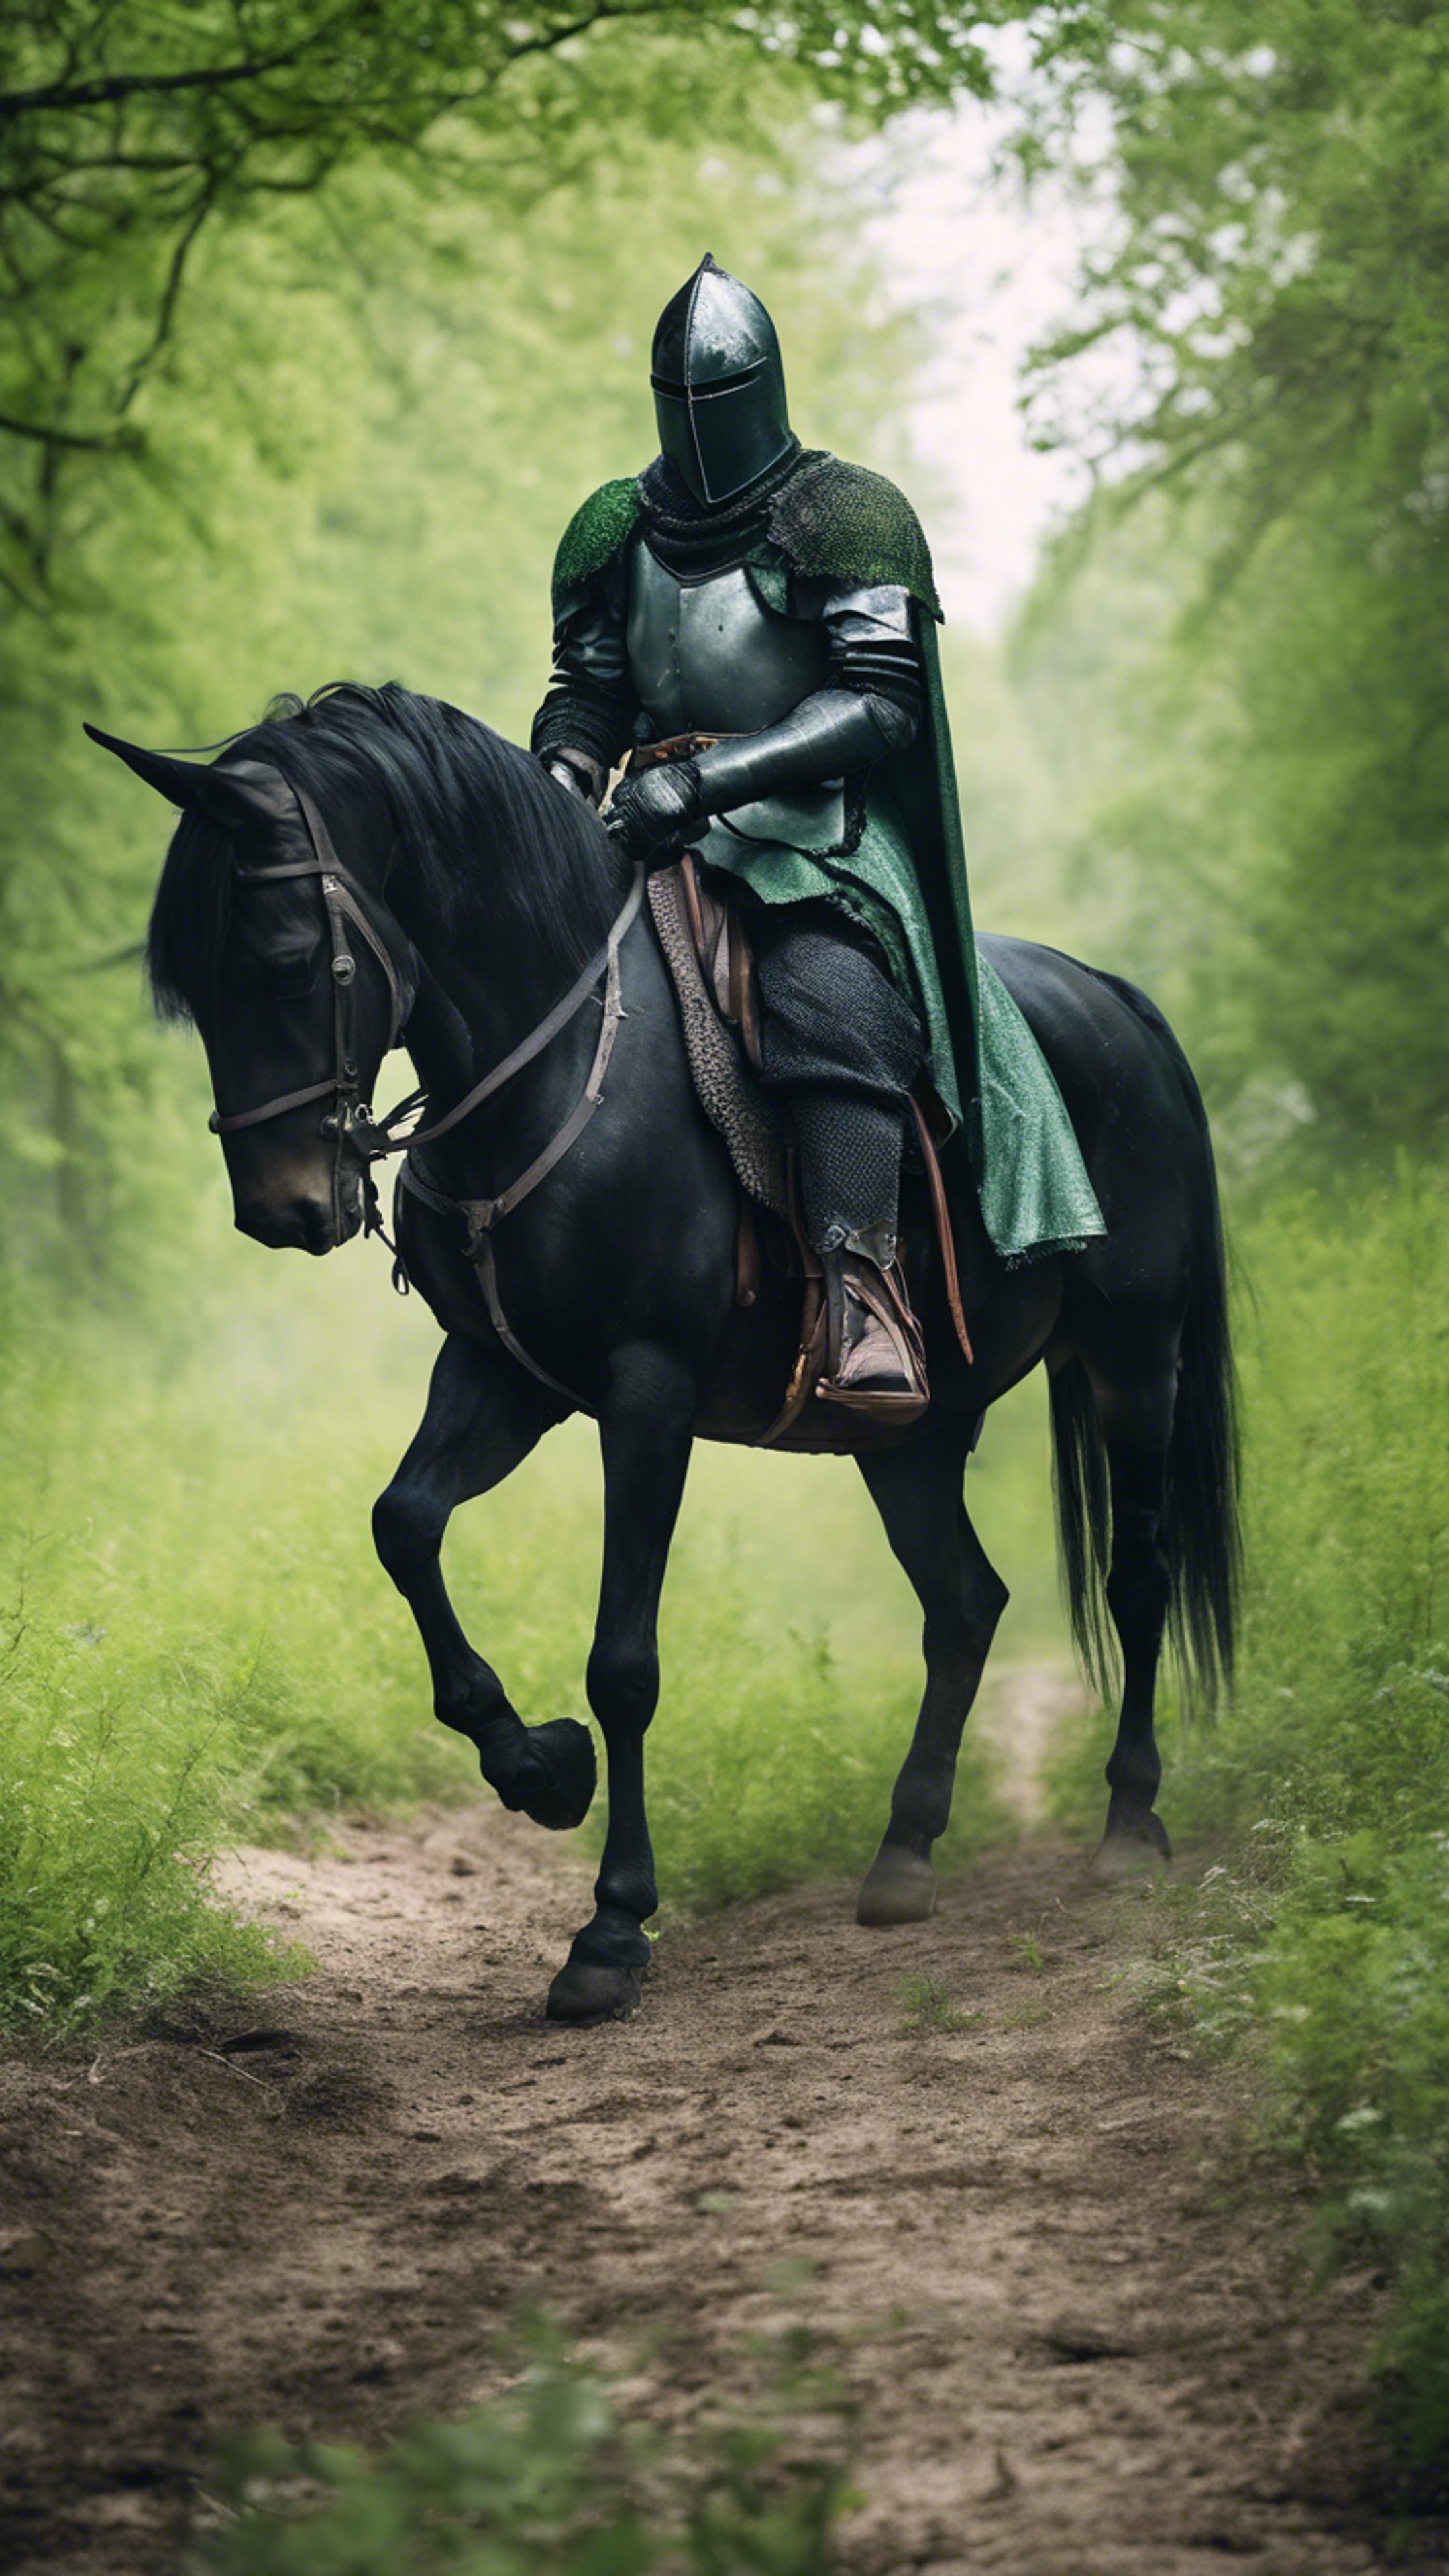 A lone black knight riding a horse in a green gothic landscape. Wallpaper[05e06e5e96b945a3b78a]